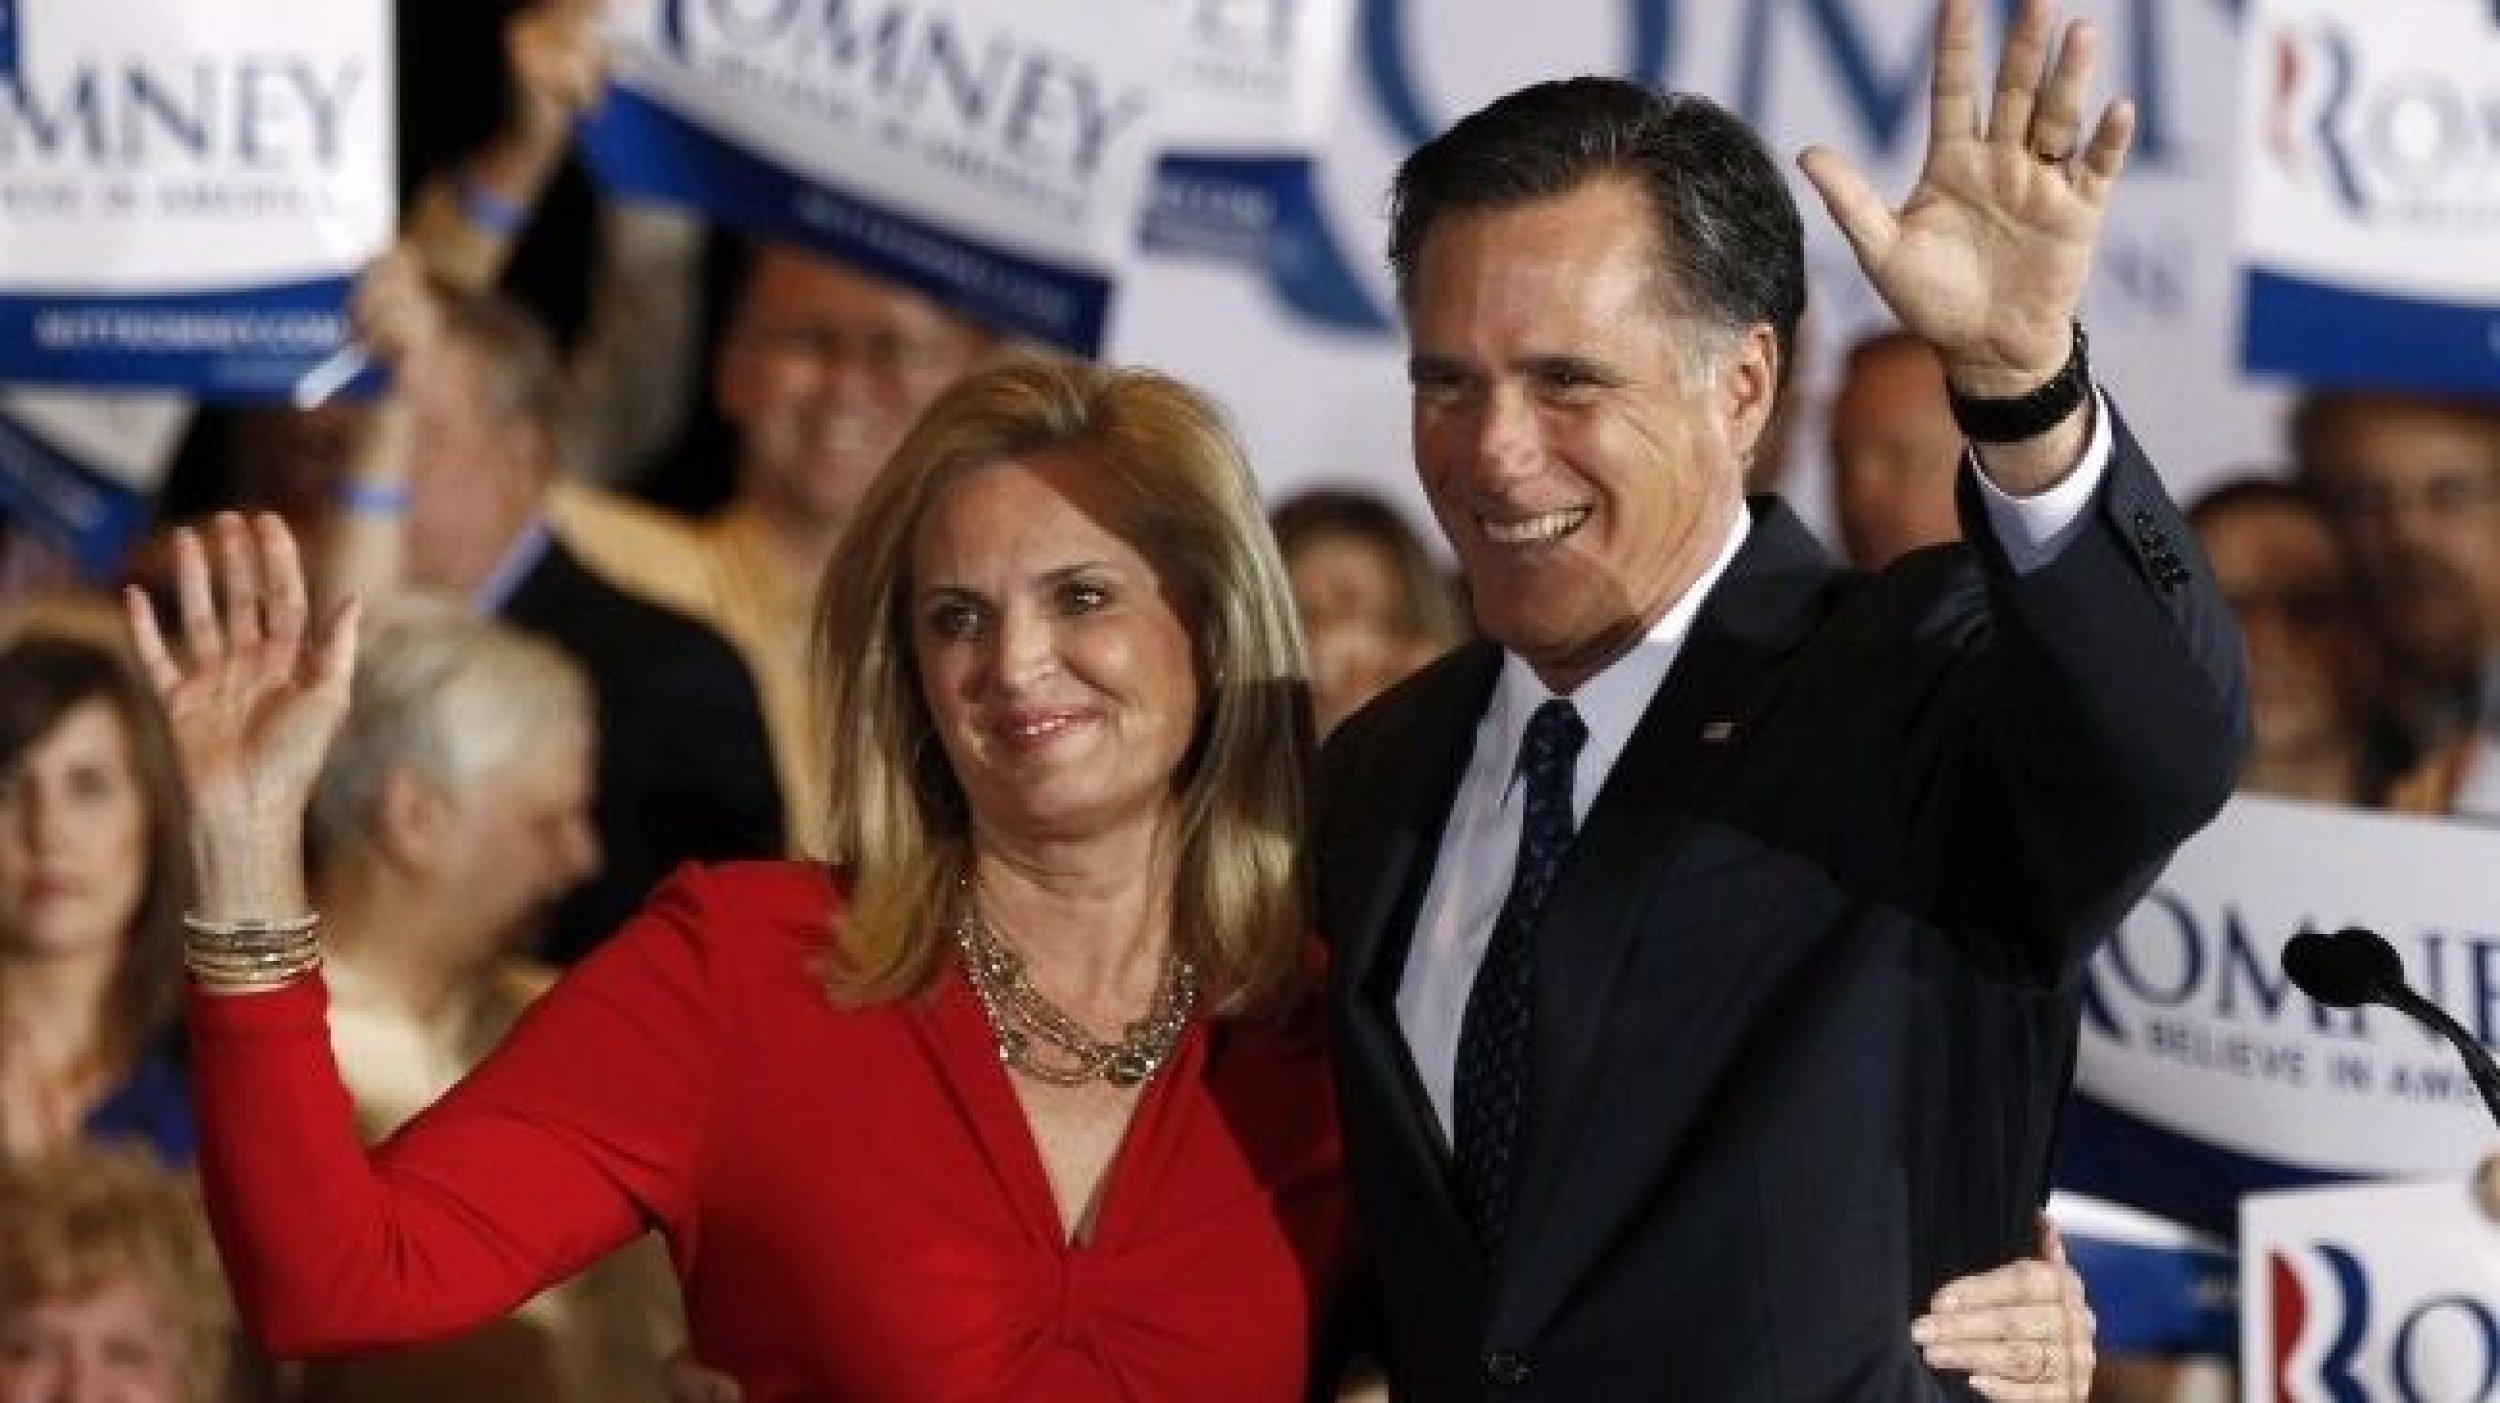 GOP Superdelegates RNC Members Say Romney Is Presidential Nominee, No Contest